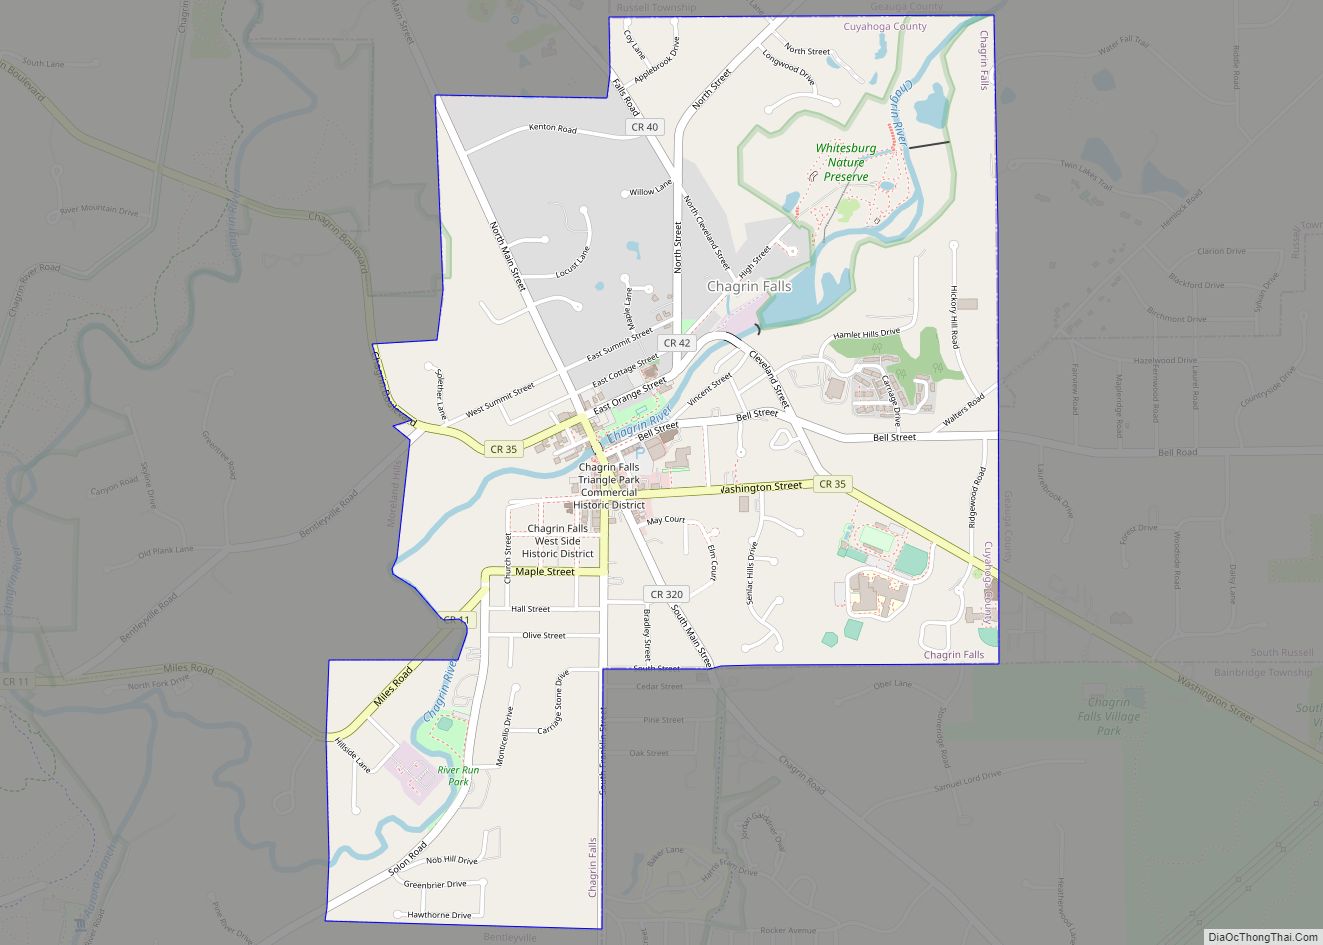 Map of Chagrin Falls village